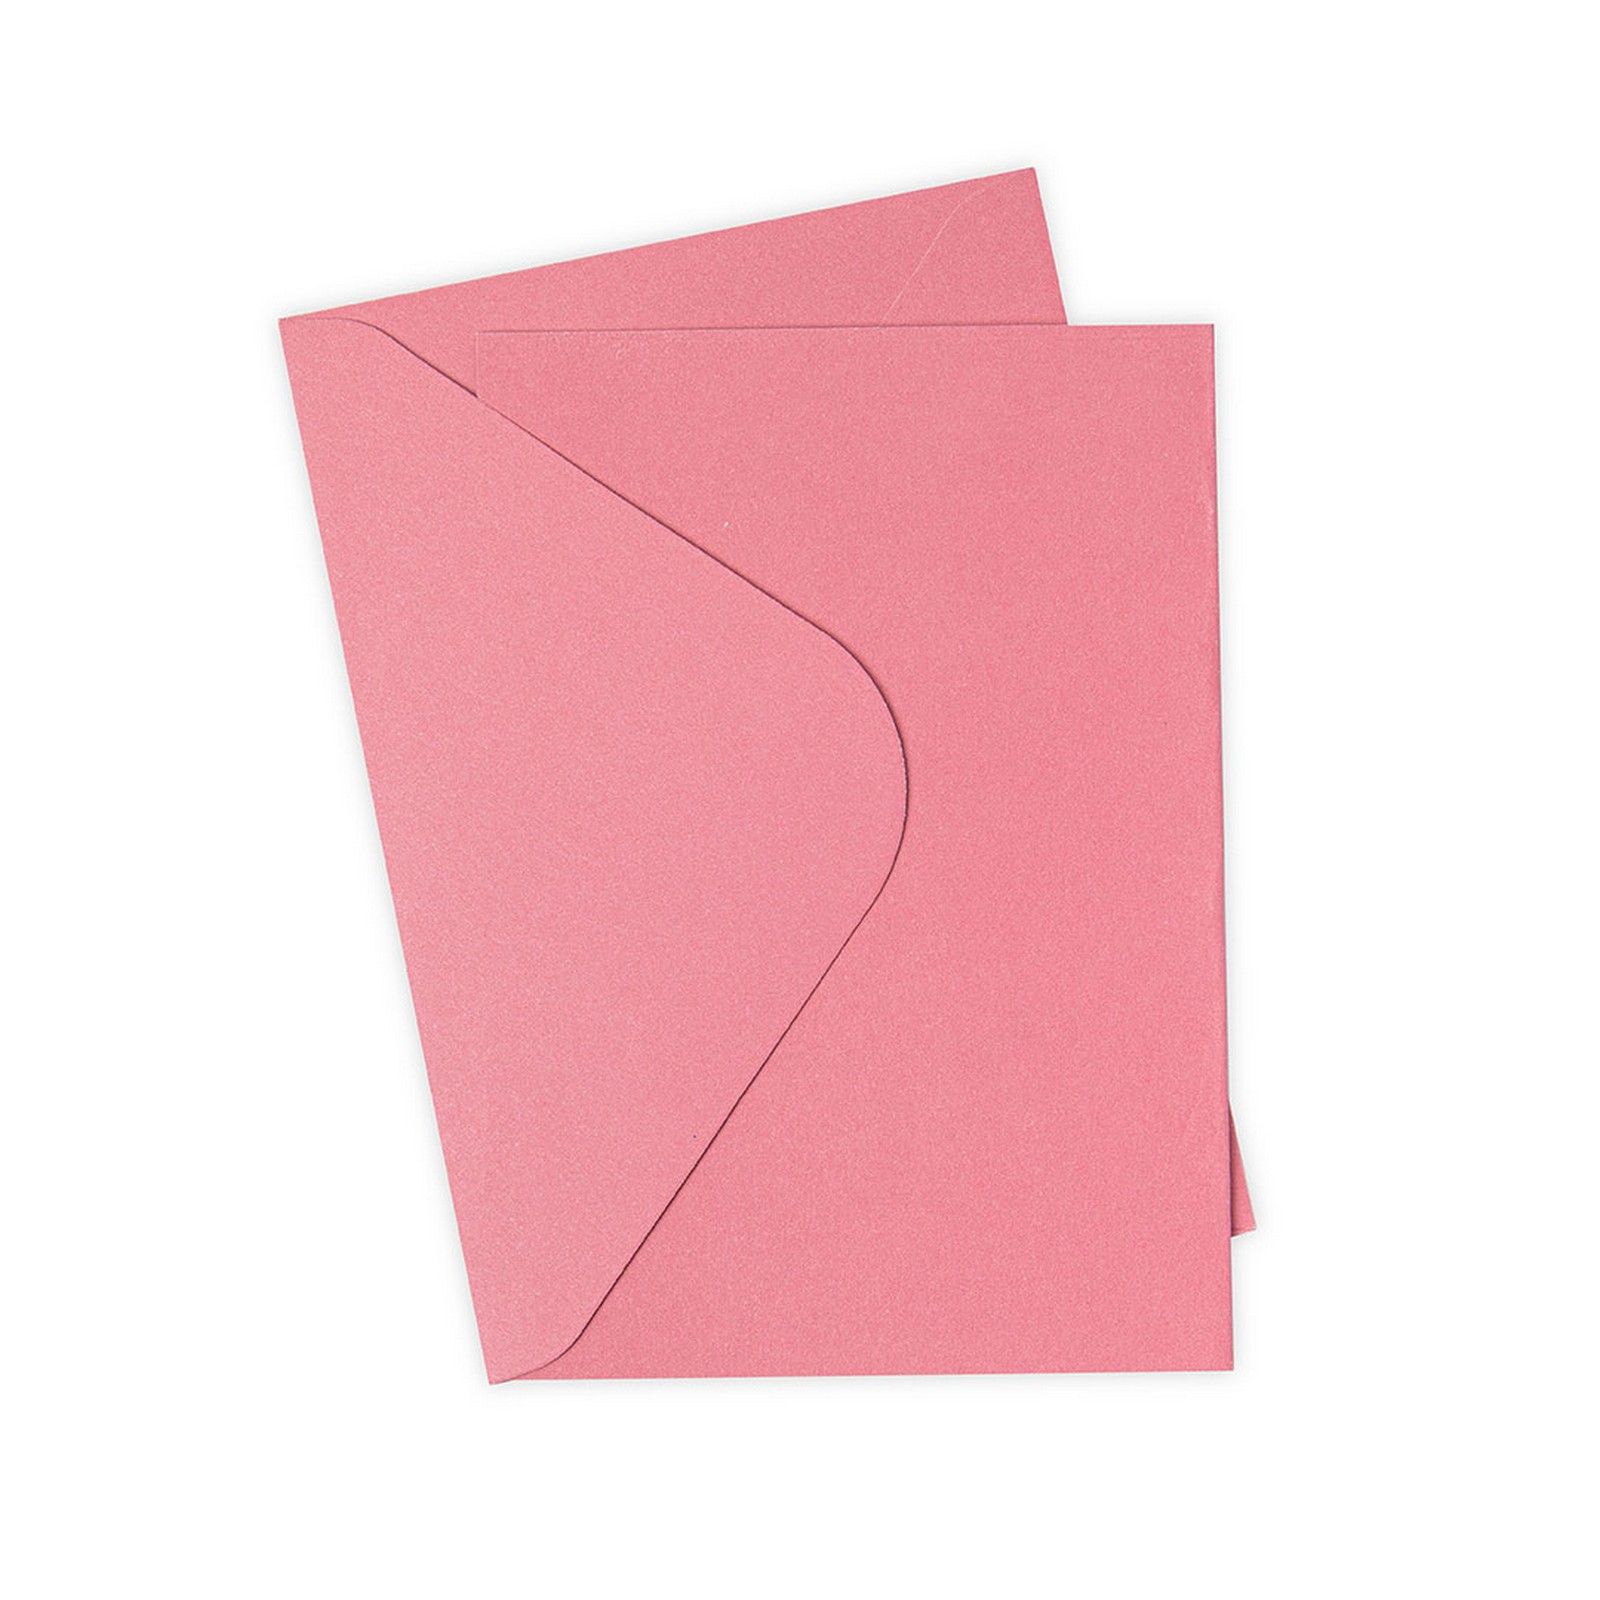 Sizzix • Surfacez Card & Envelope pack A6 Rose 10pieces